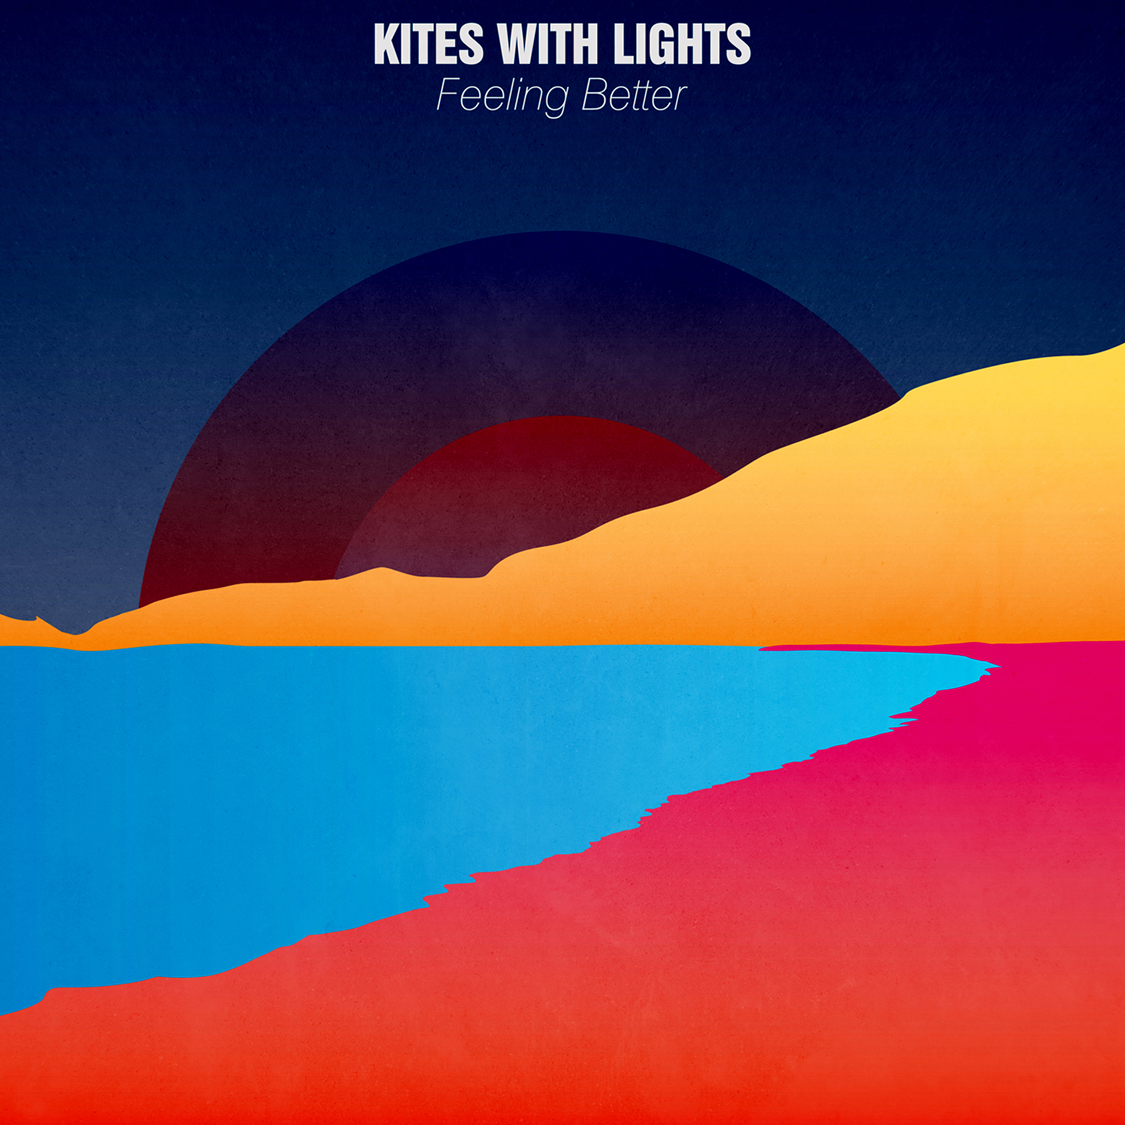 Kites With Lights httpslh4googleusercontentcom5idWGajSXC0AAA